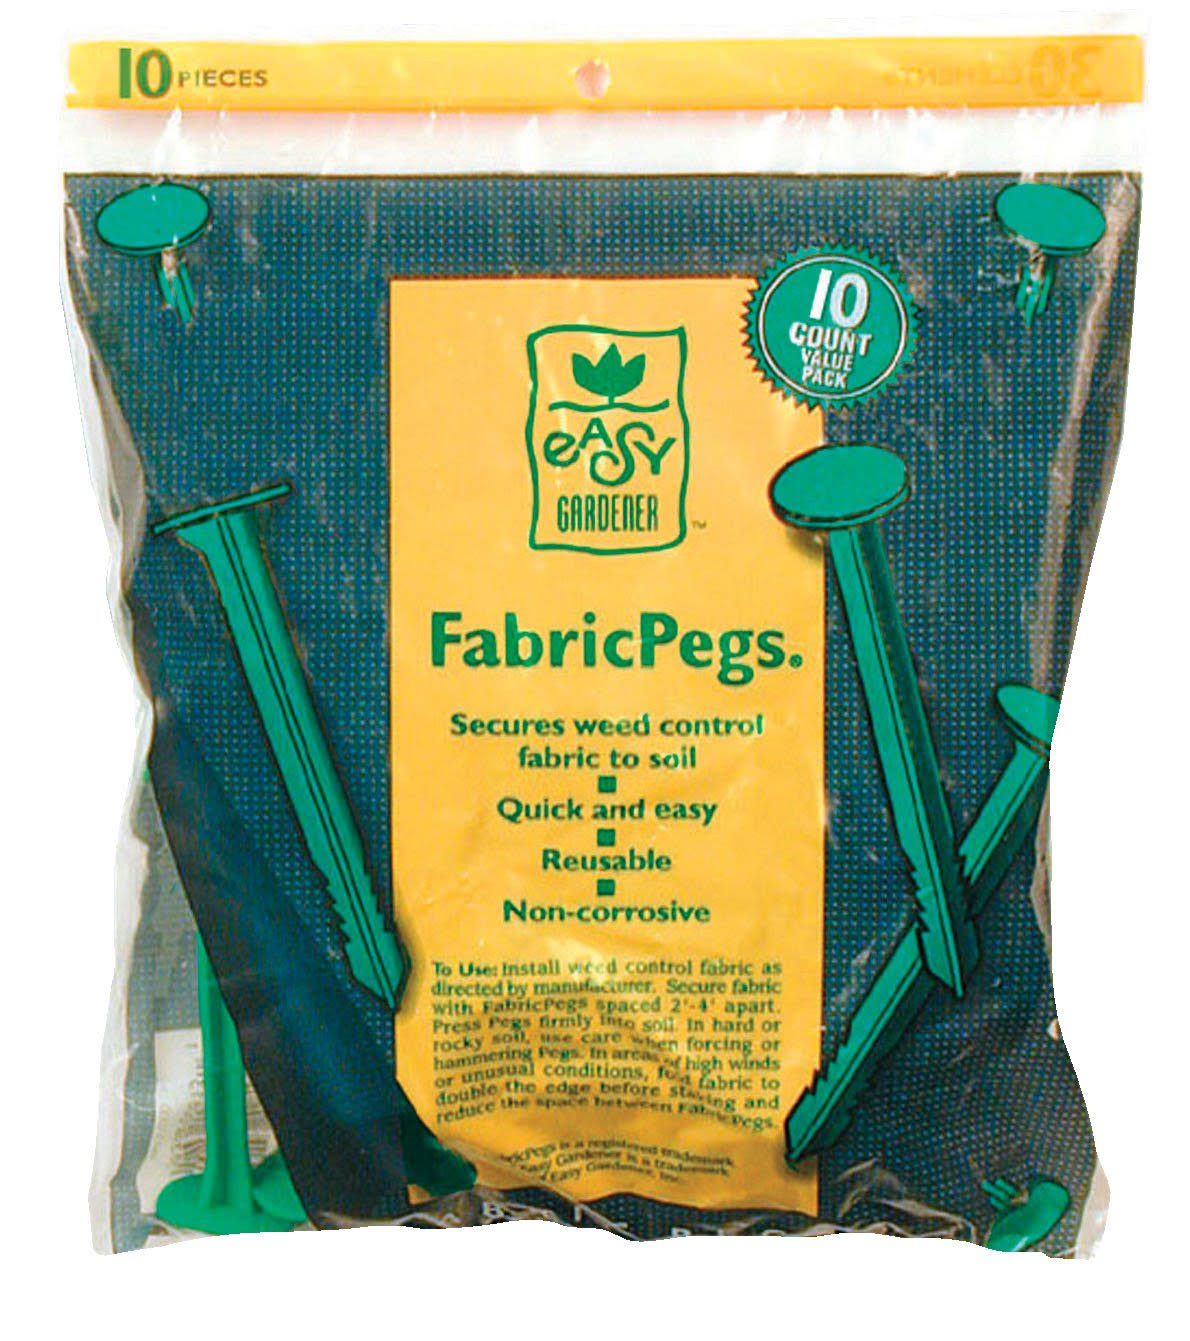 Easy Gardener Plastic Fabric Pegs - 10 Pack